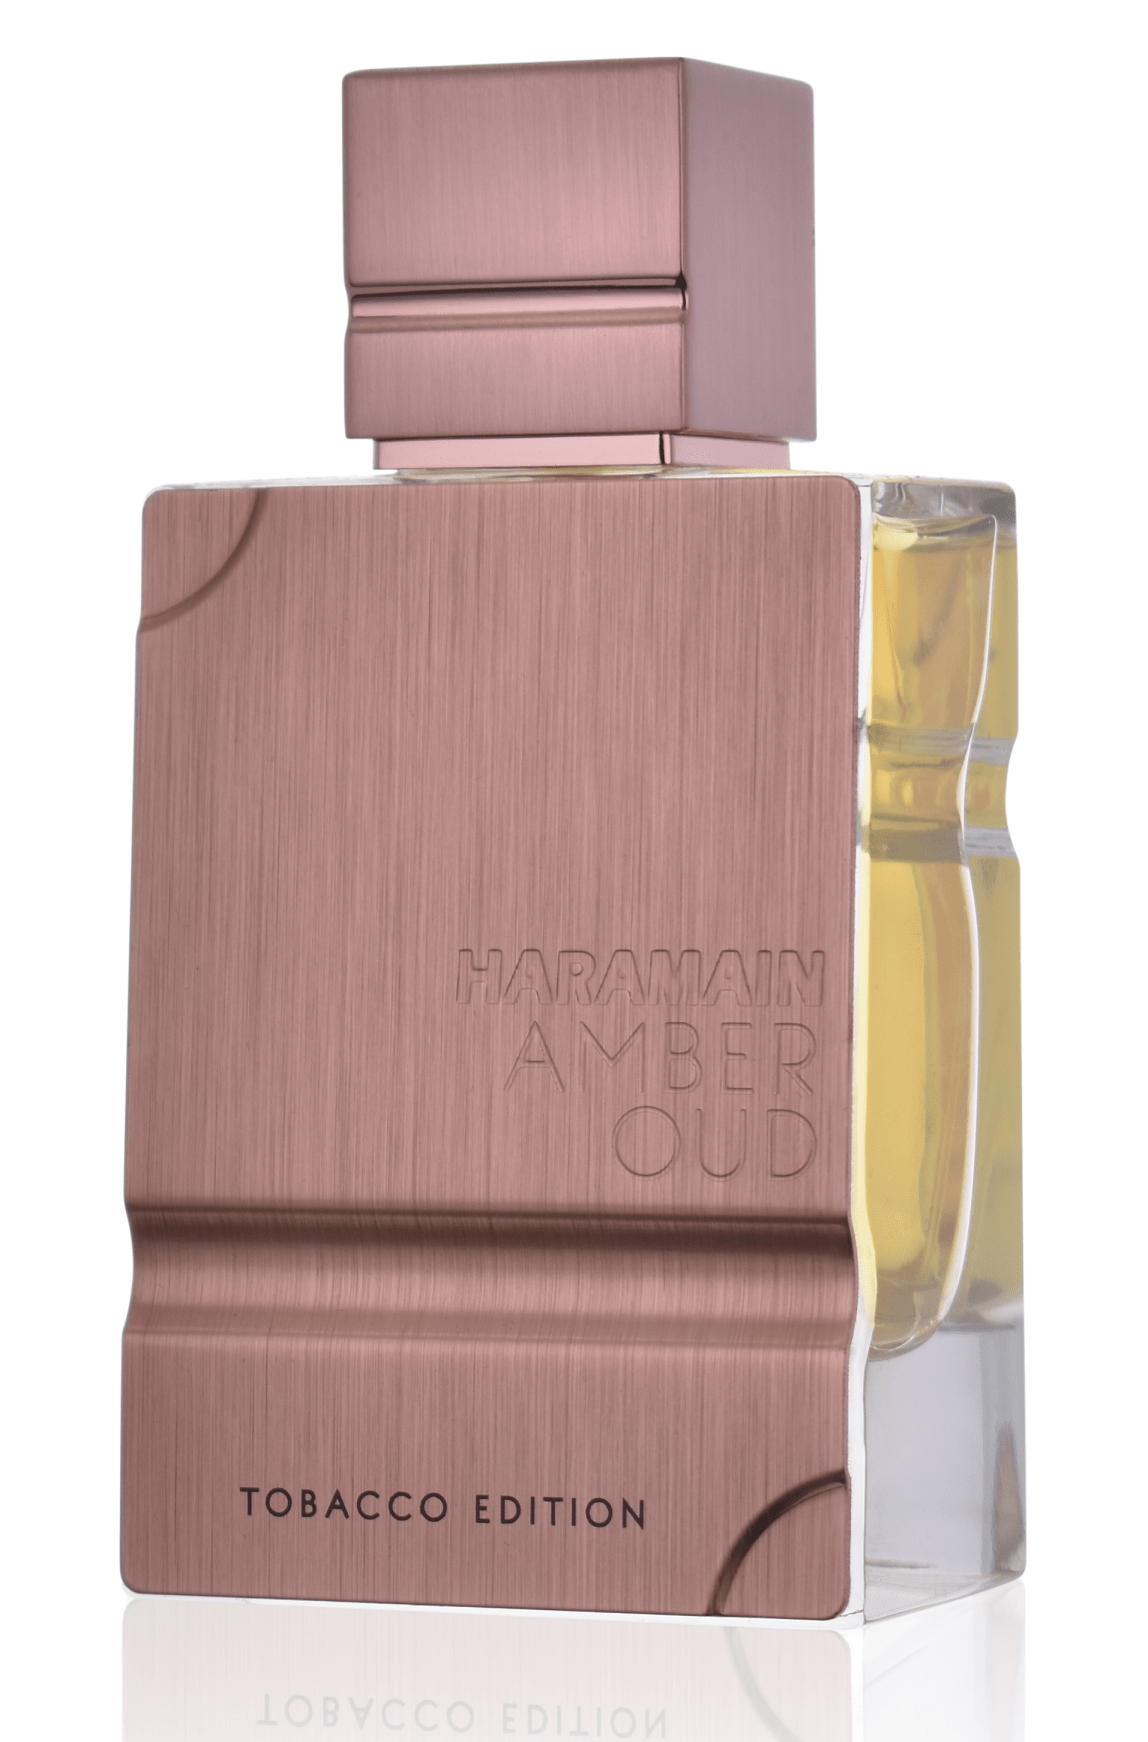 Al Haramain Amber Oud Tobacco Edition 60 ml Eau de Parfum        